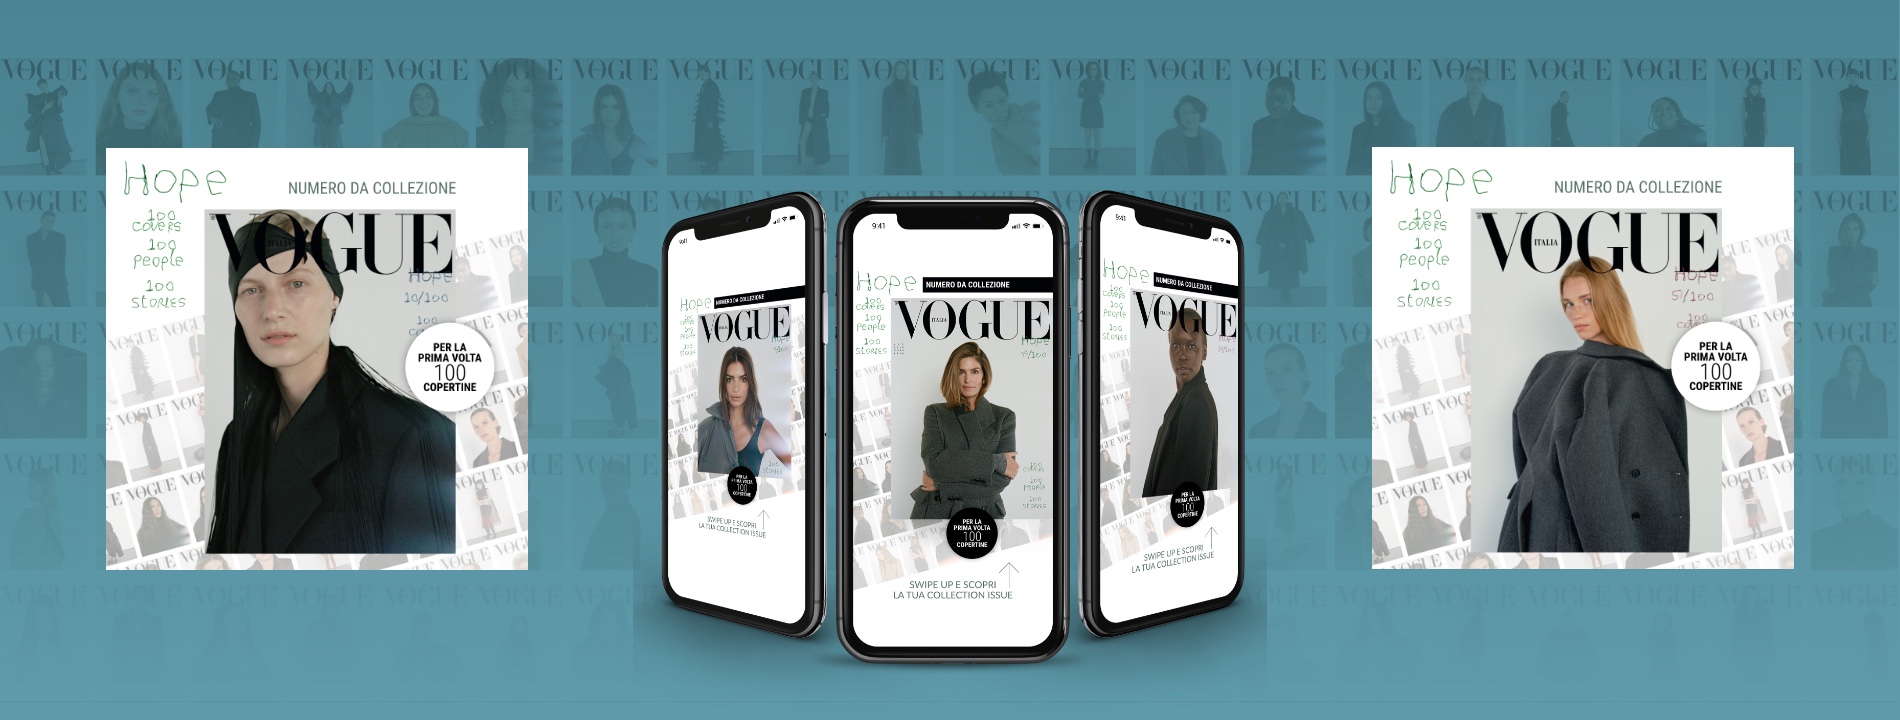 Vogue Italia sceglie Arachno per la campagna digital di Vogue Hope